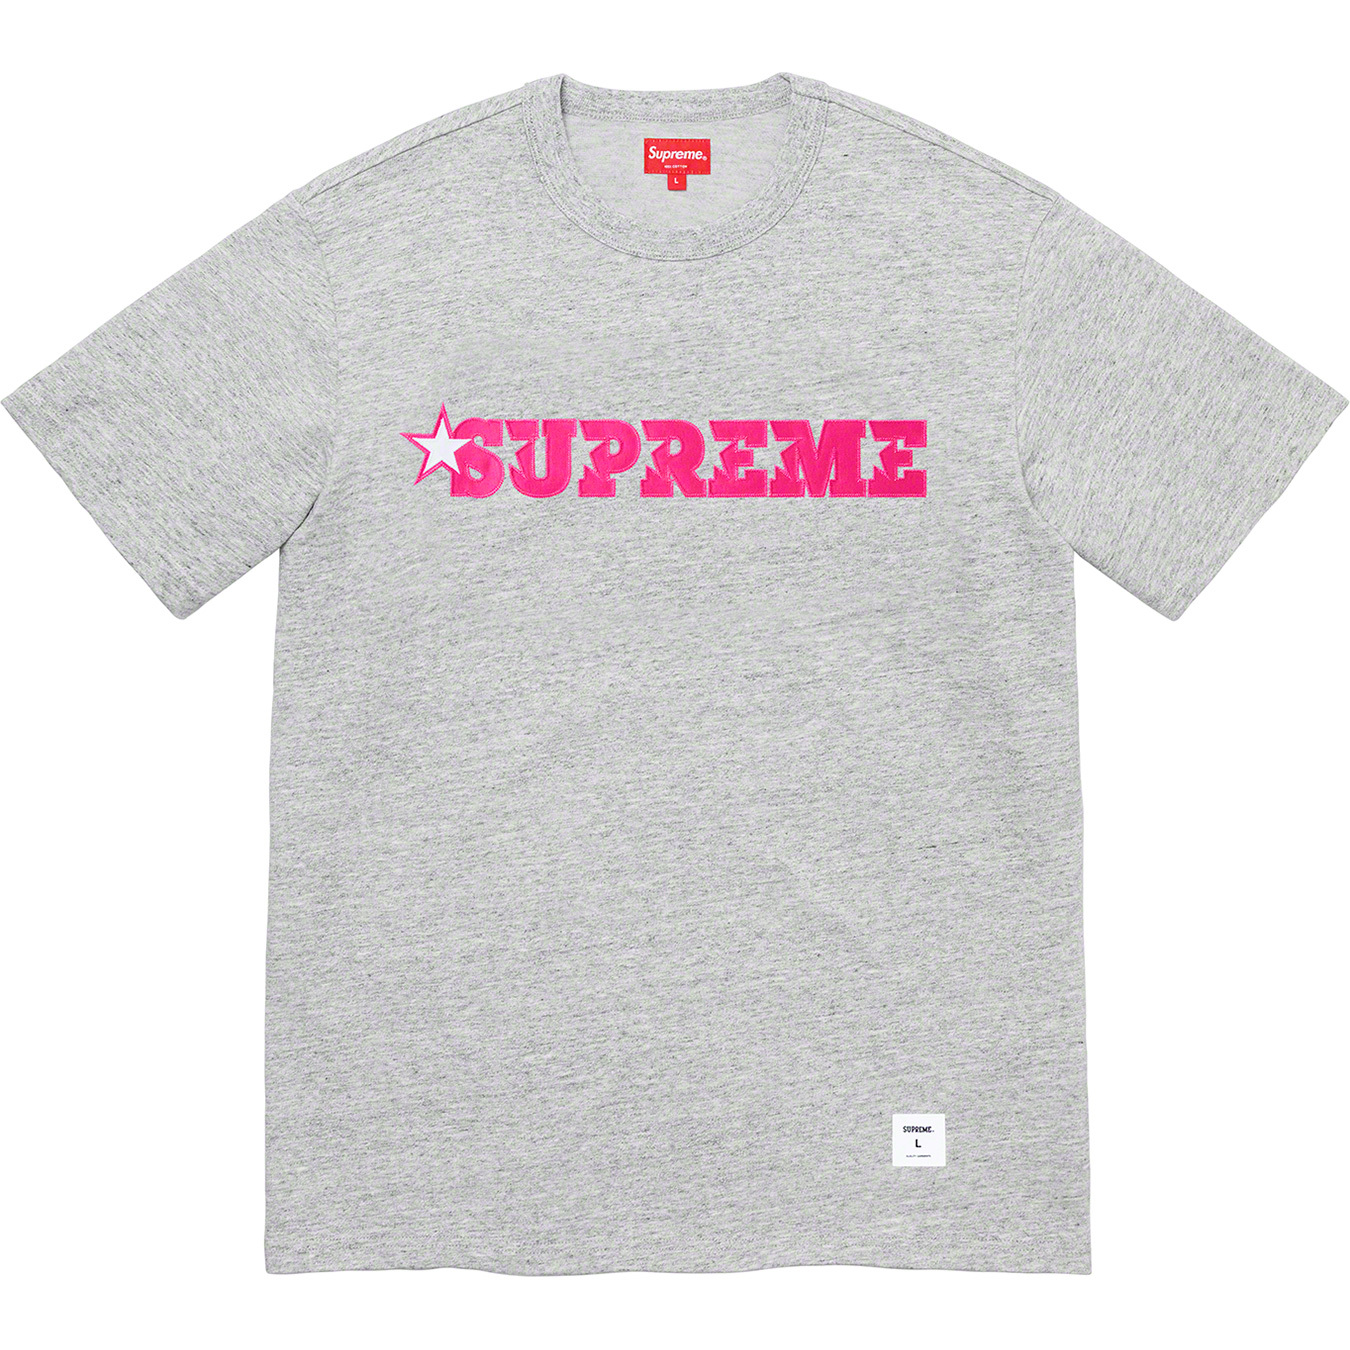 (M)Supreme Star Logo S/S TopスターロゴTシャツ黒メンズ